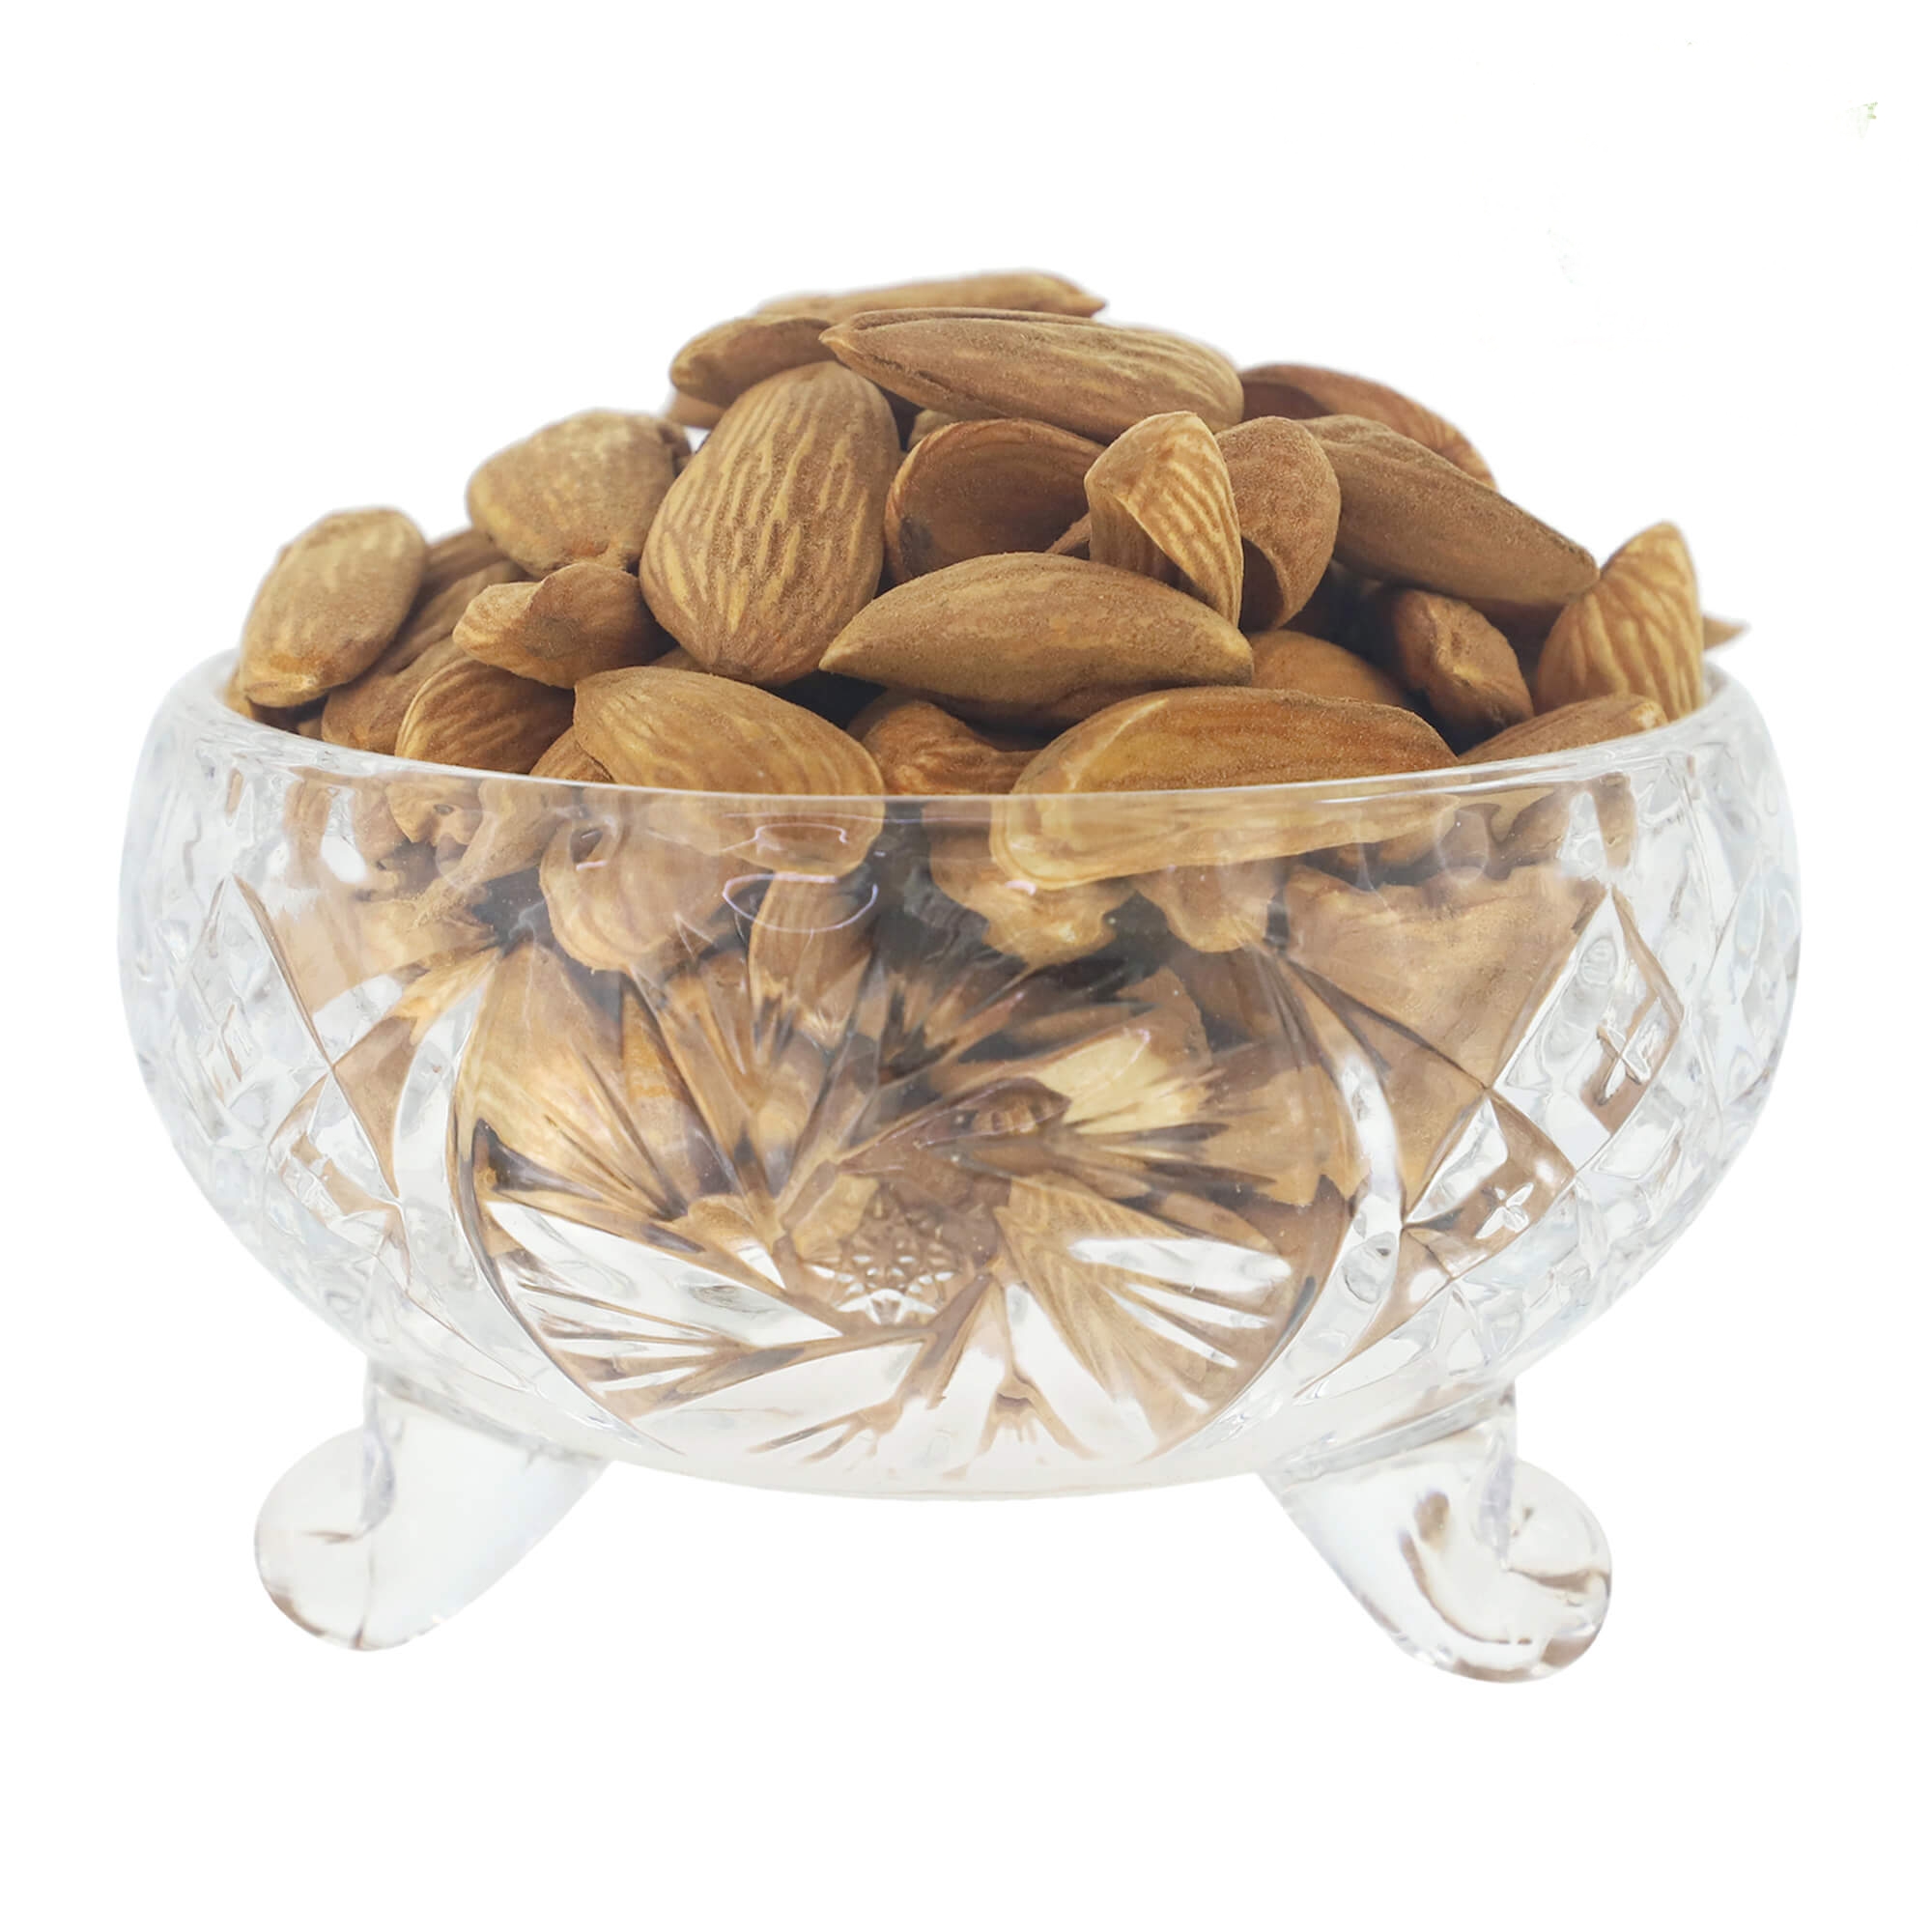 Export price of Iranian Mamra almonds: